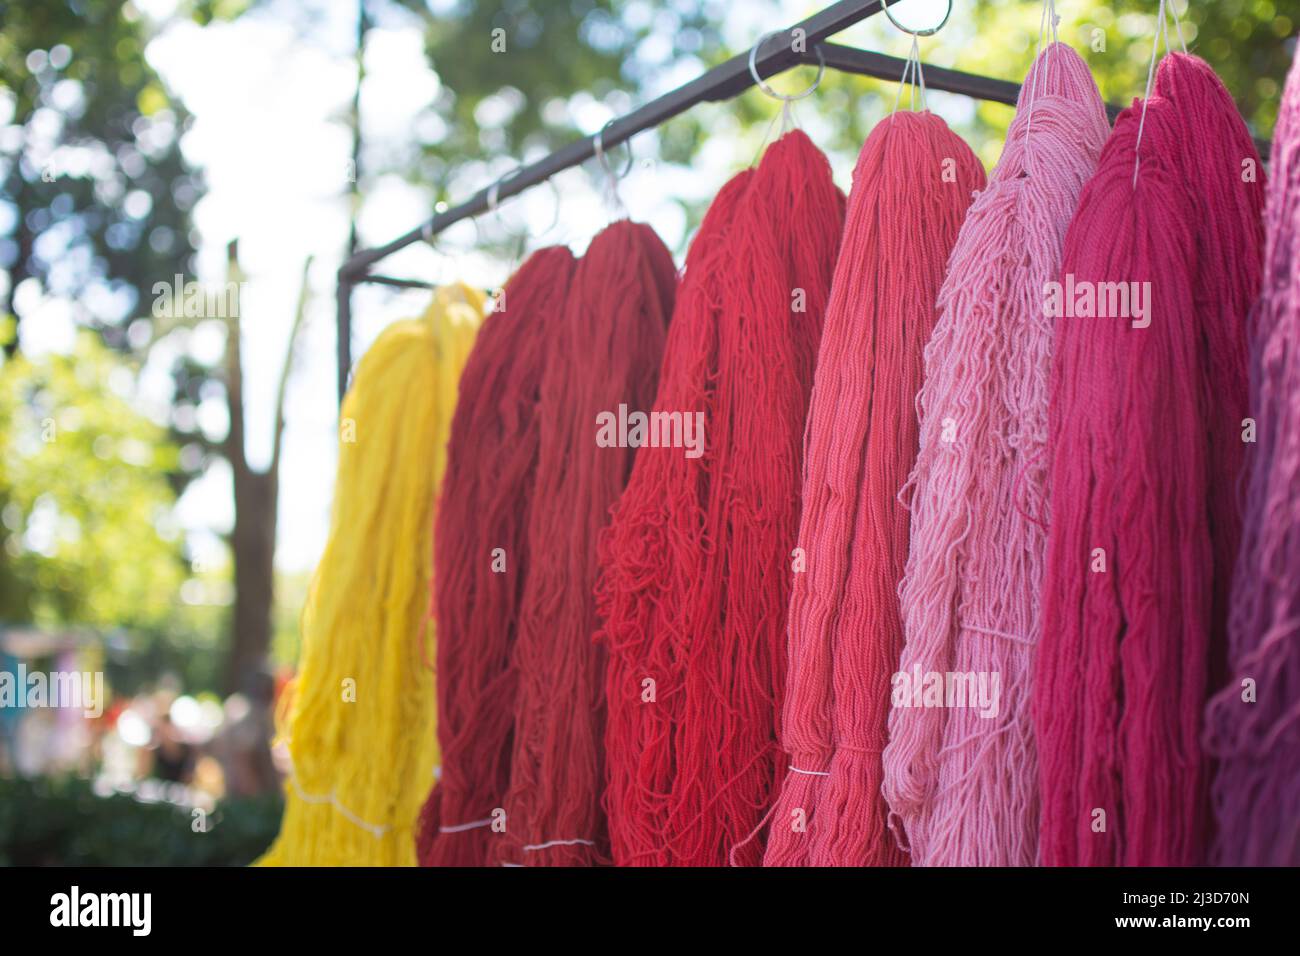 Lana colorata in vendita in fiera regionale Foto Stock